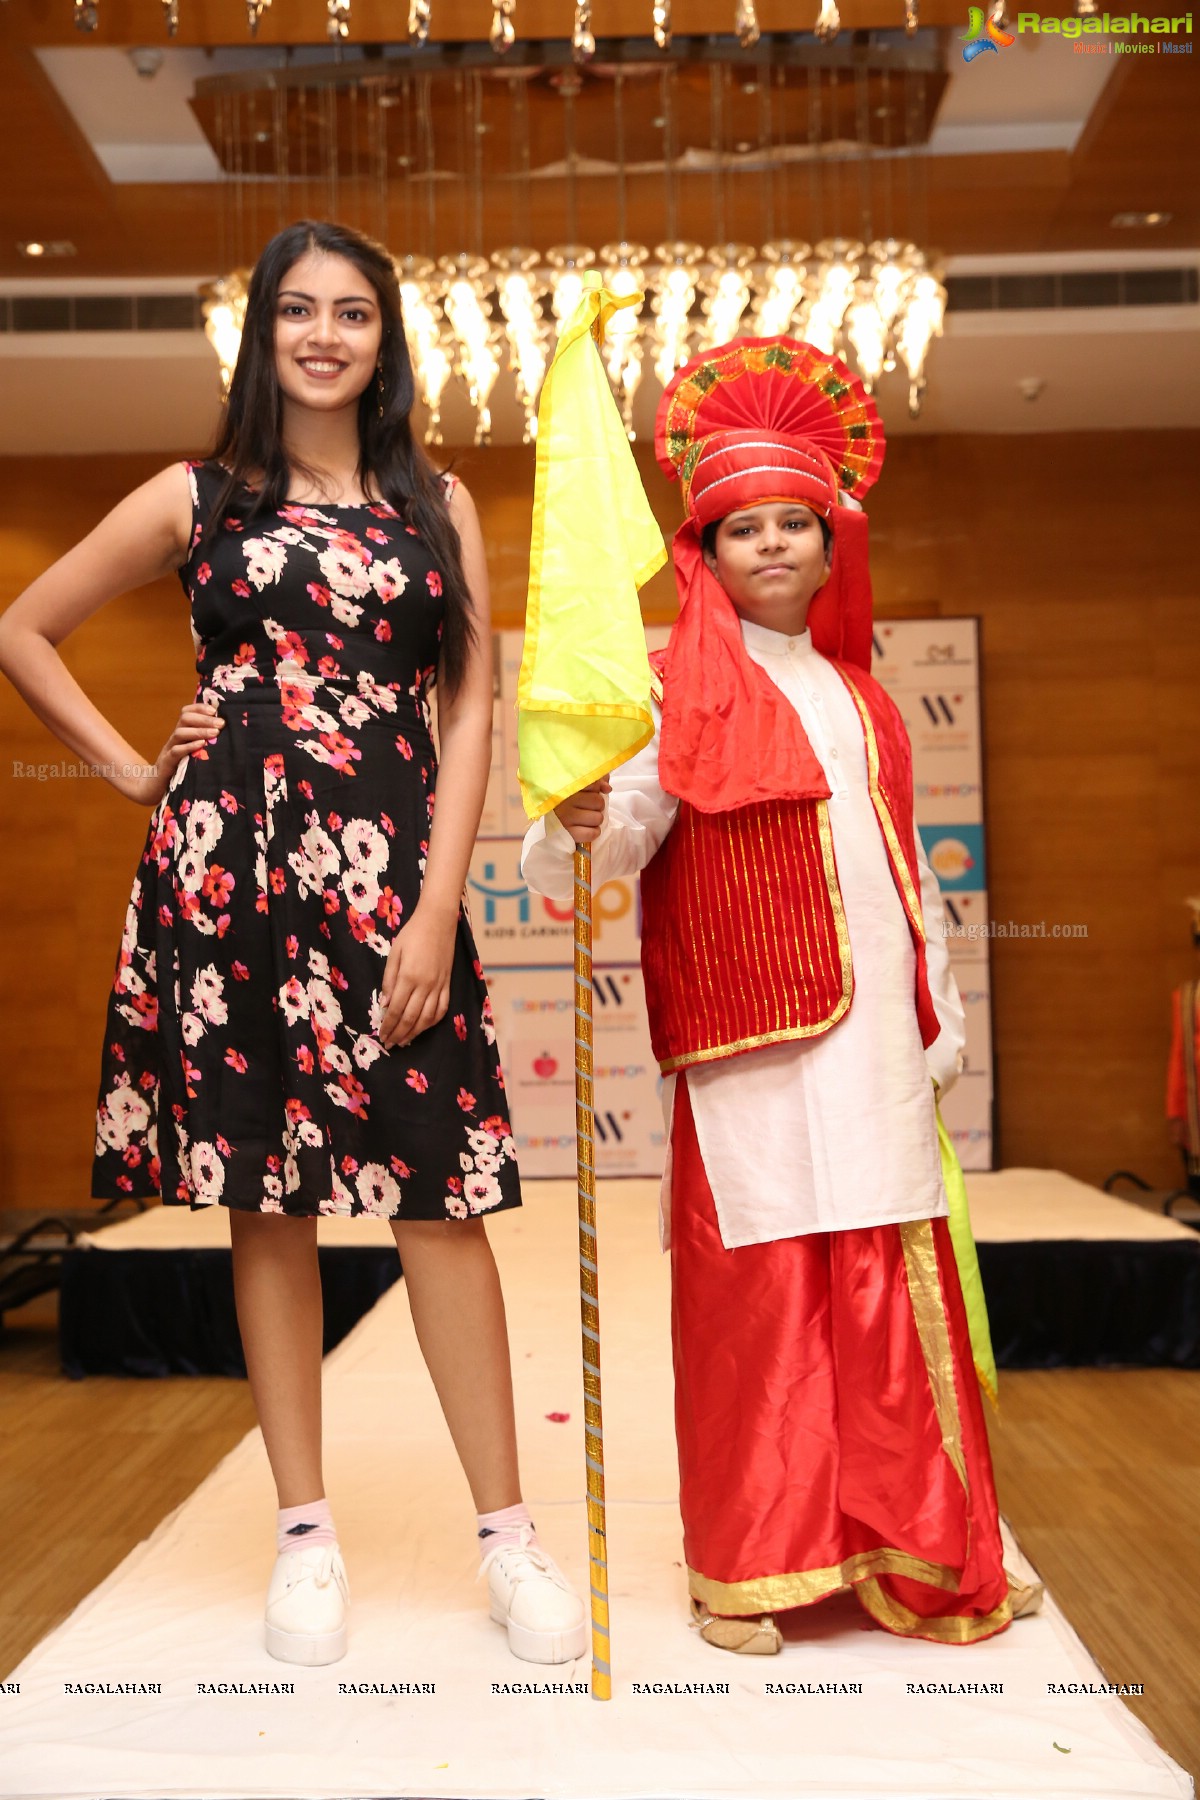 Kids Fashion Show at Happy-On Kids Carnival Curtain Raiser at Hotel Marigold